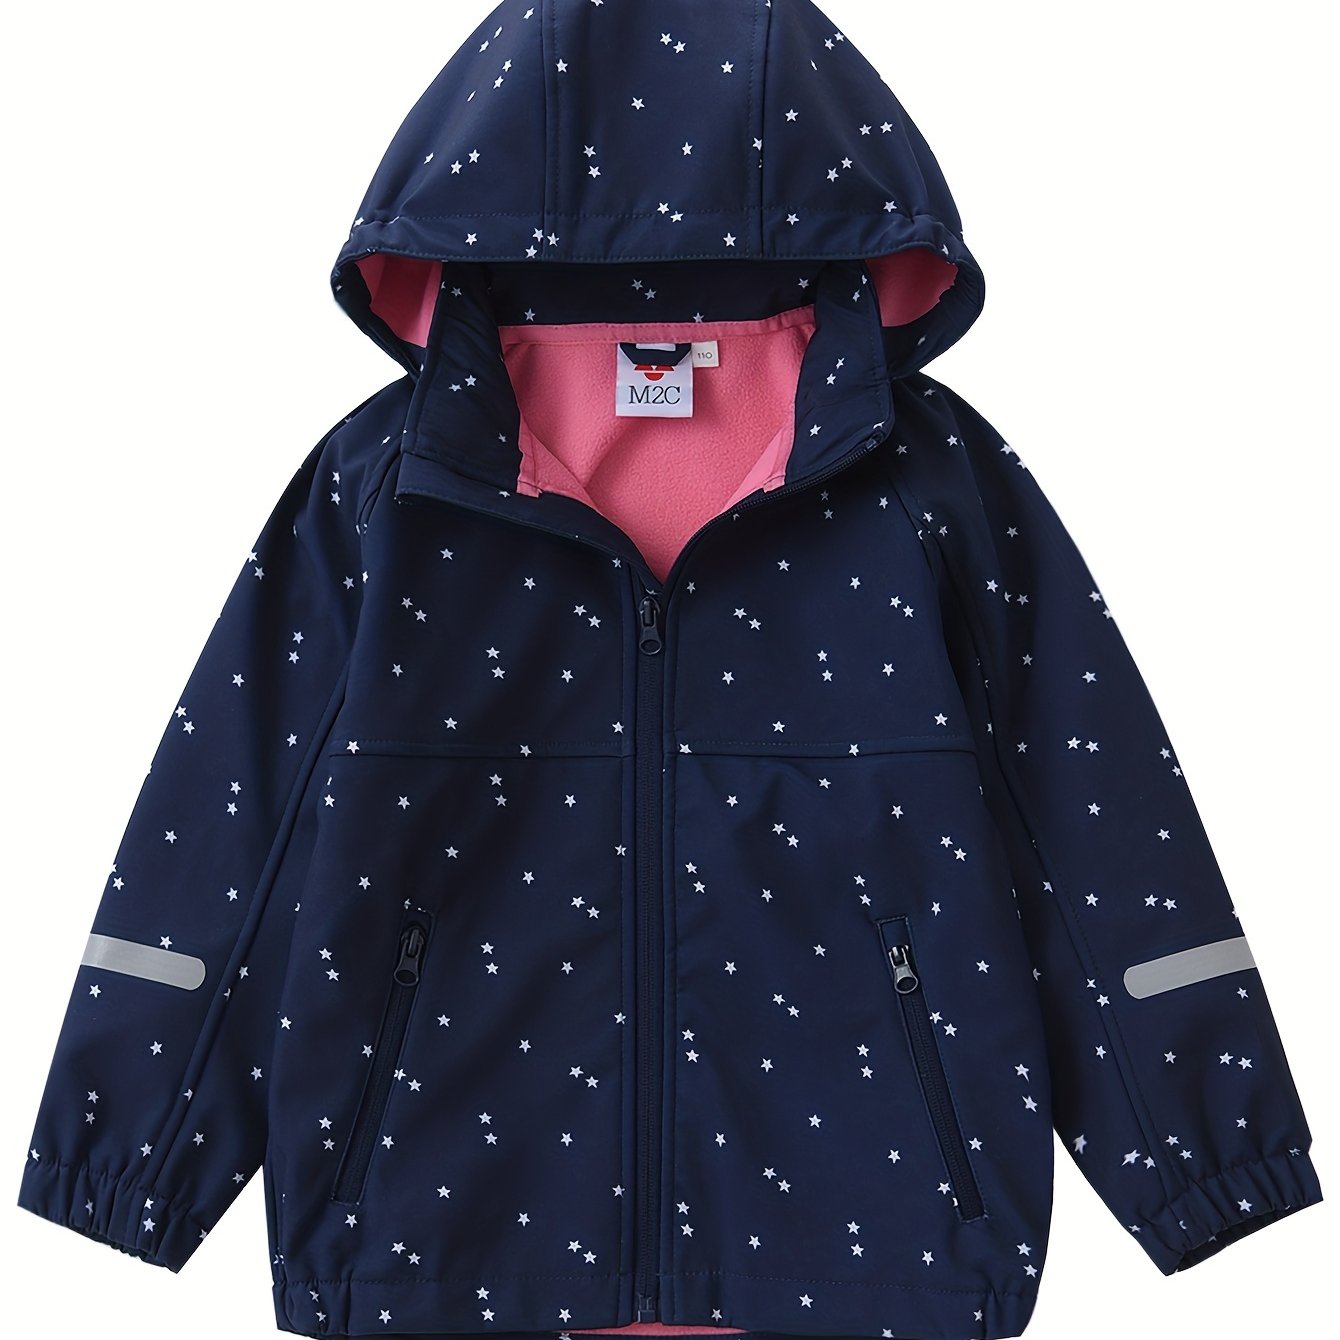  Arshiner Baby Girl Kid Floral Hooded Rain Jacket Outwear  lightweight Raincoat Windbreaker: Clothing, Shoes & Jewelry